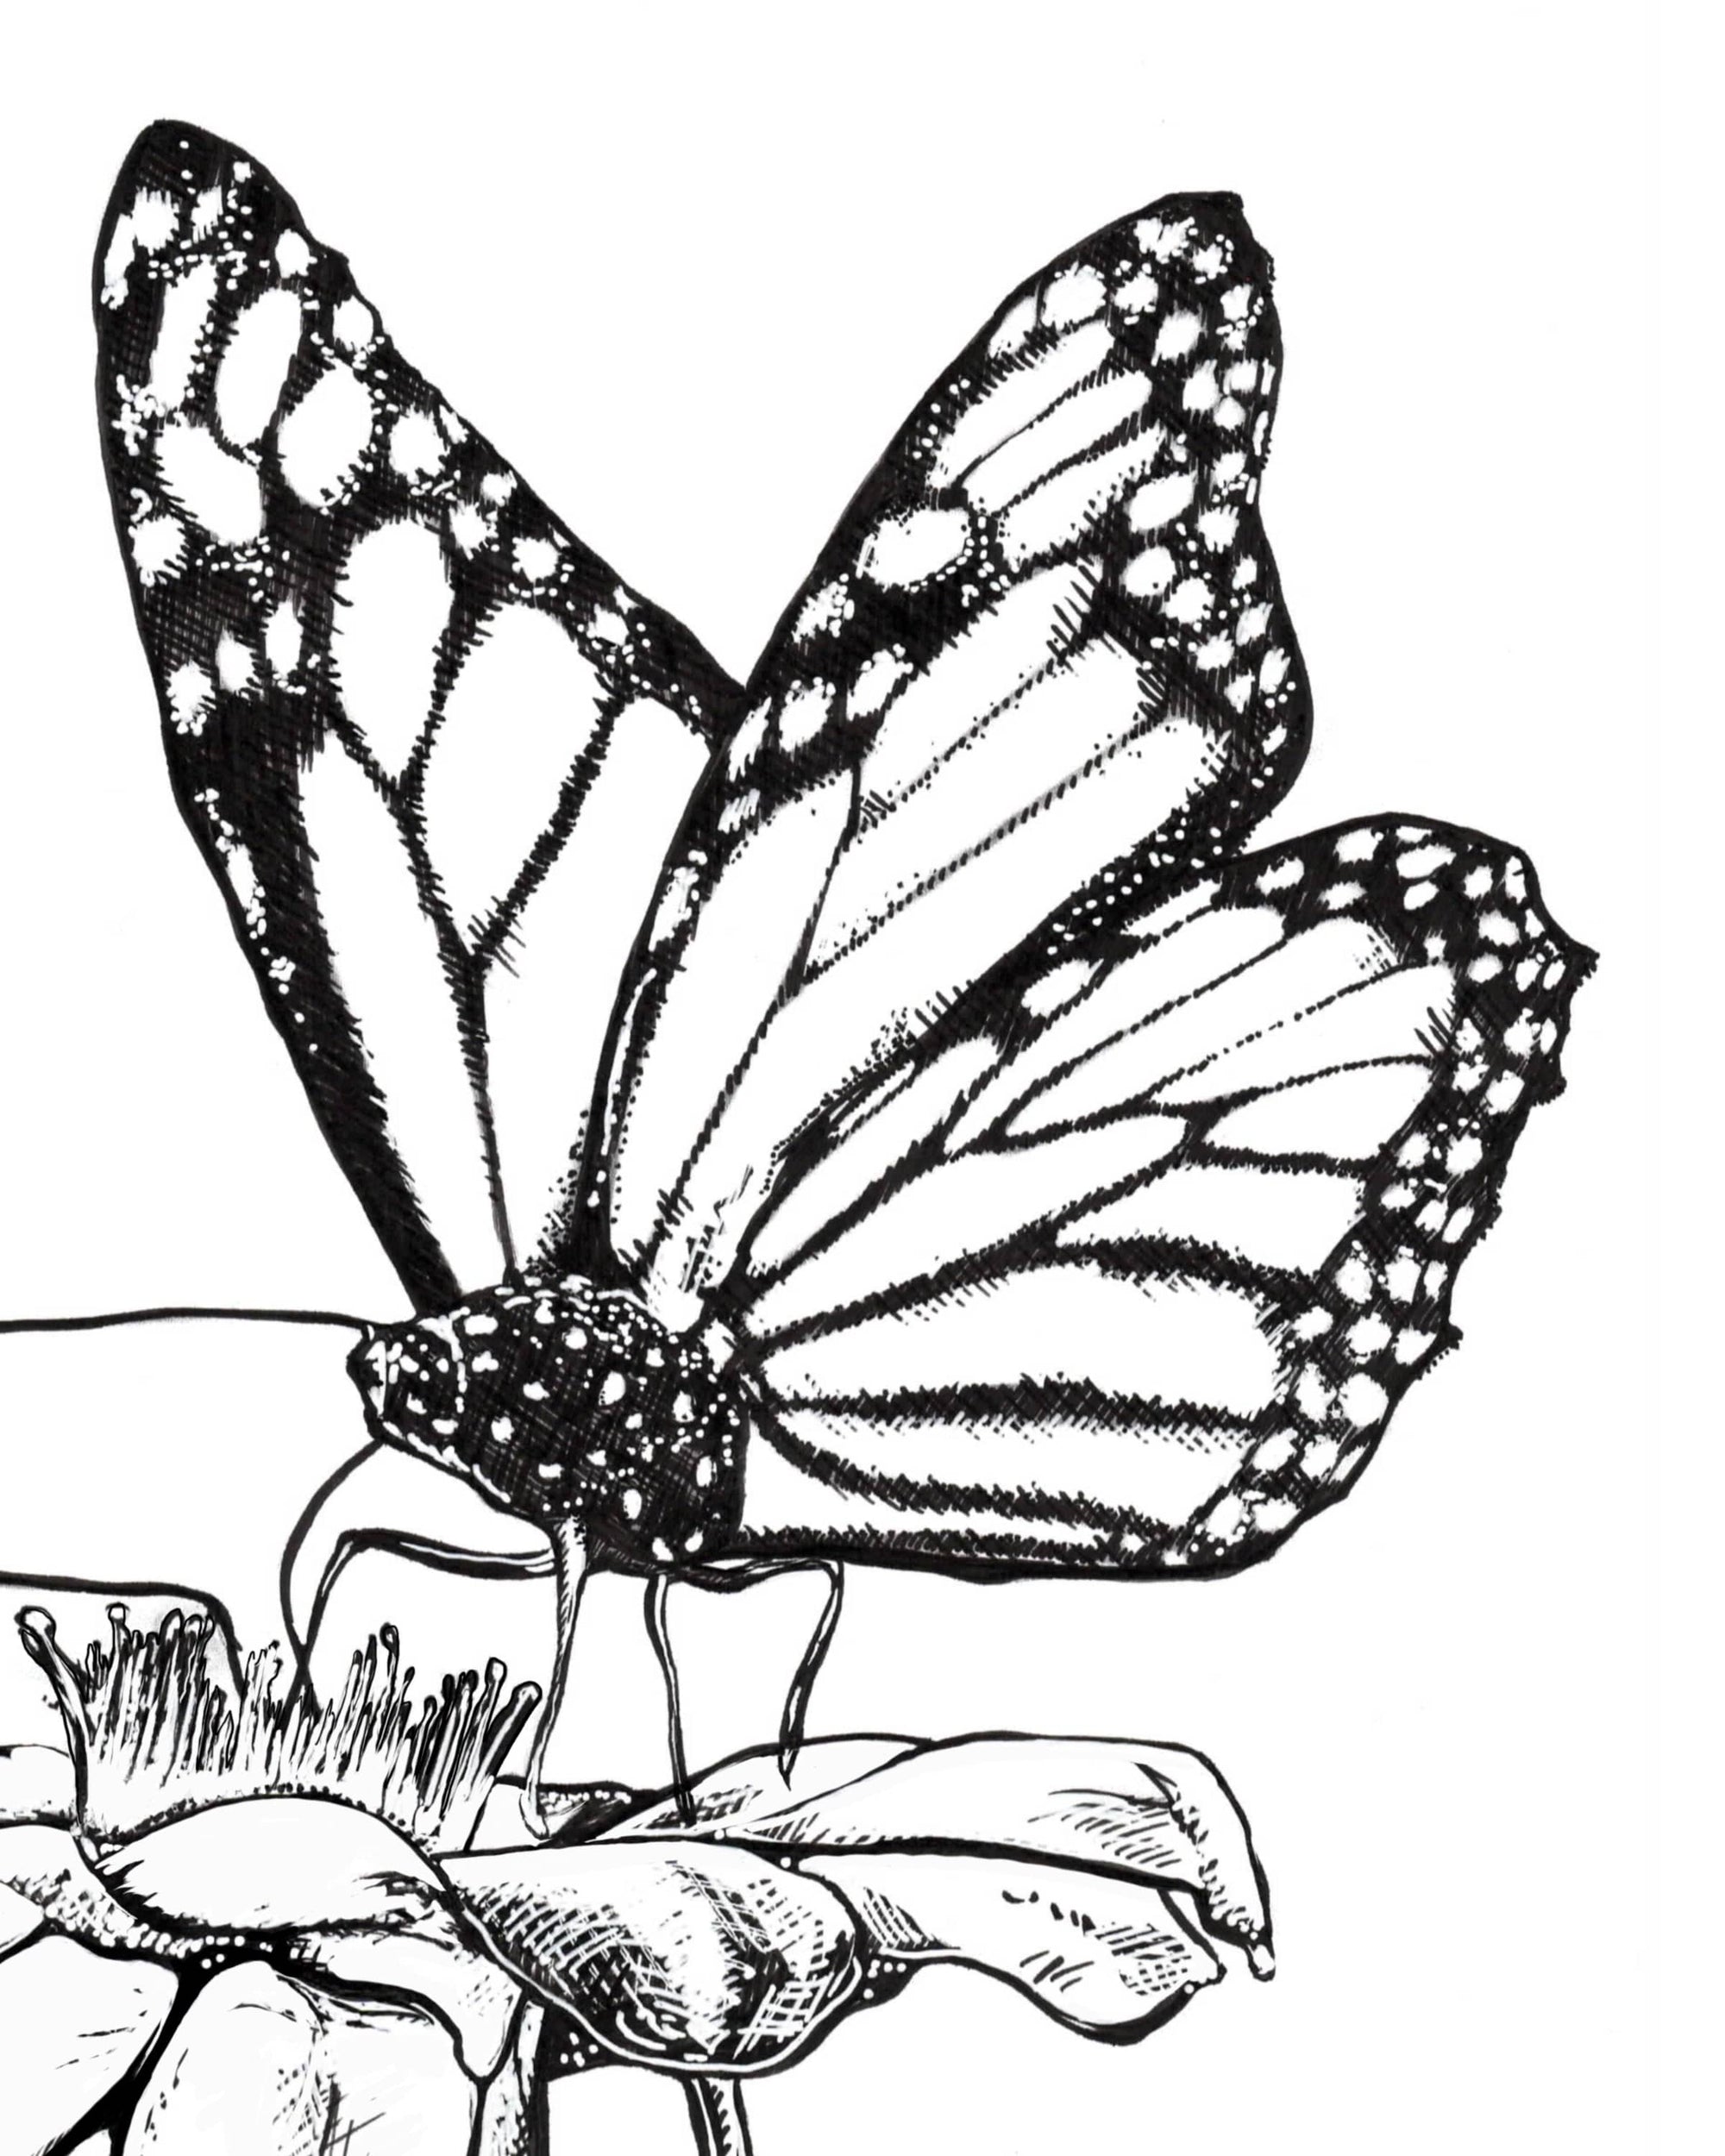 Butterfly on Flower Print